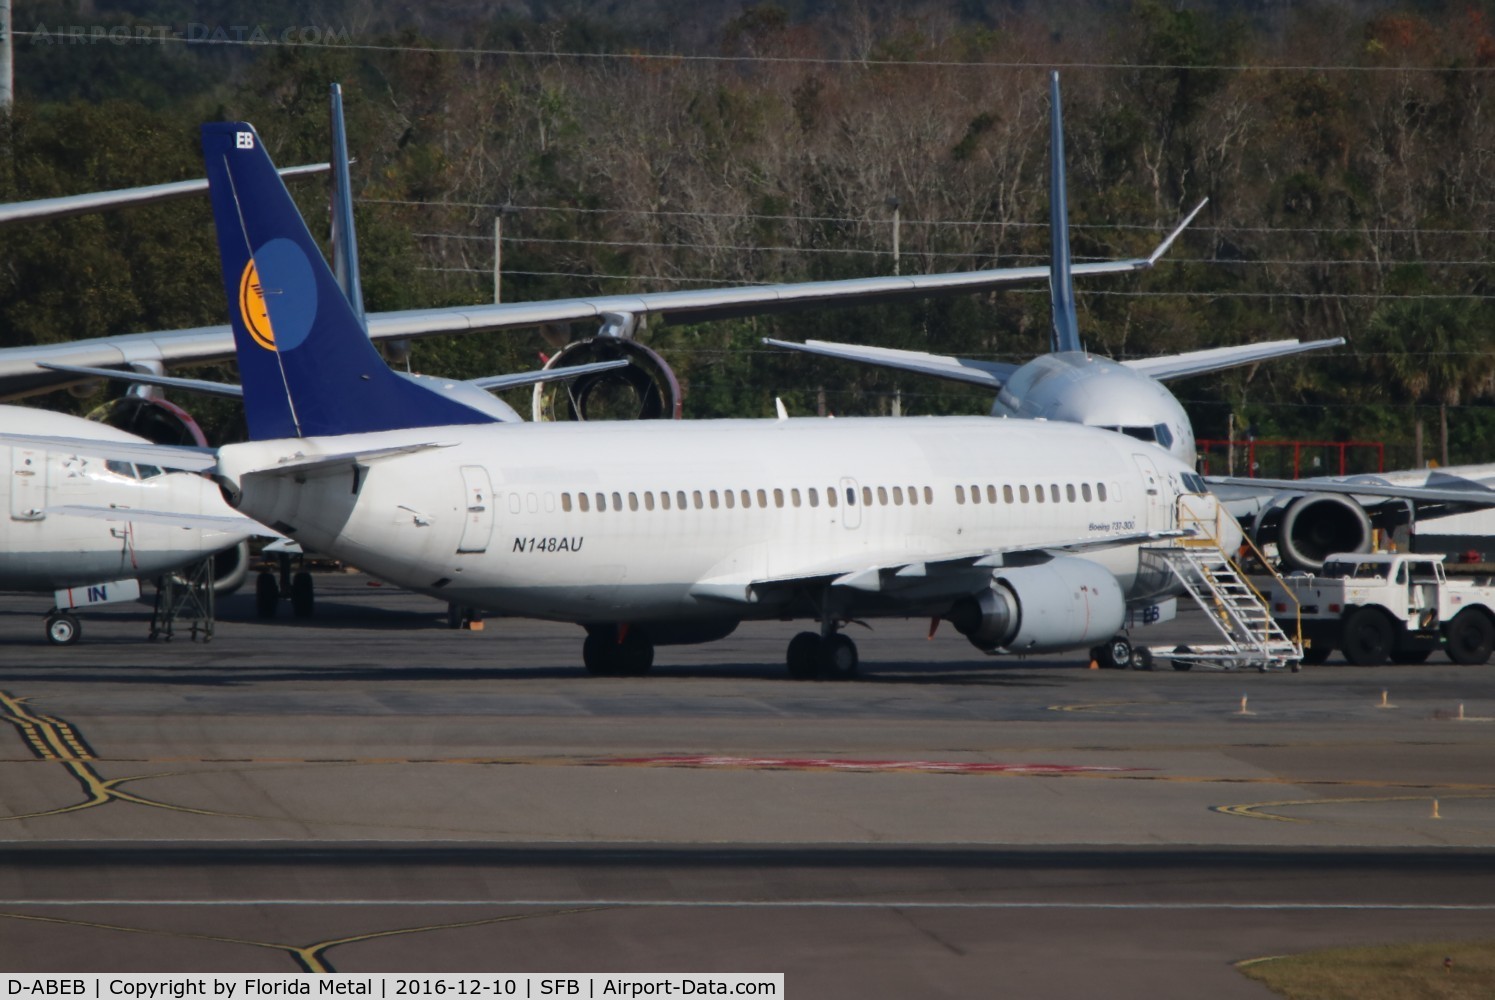 D-ABEB, 1991 Boeing 737-330 C/N 25148, Lufthansa